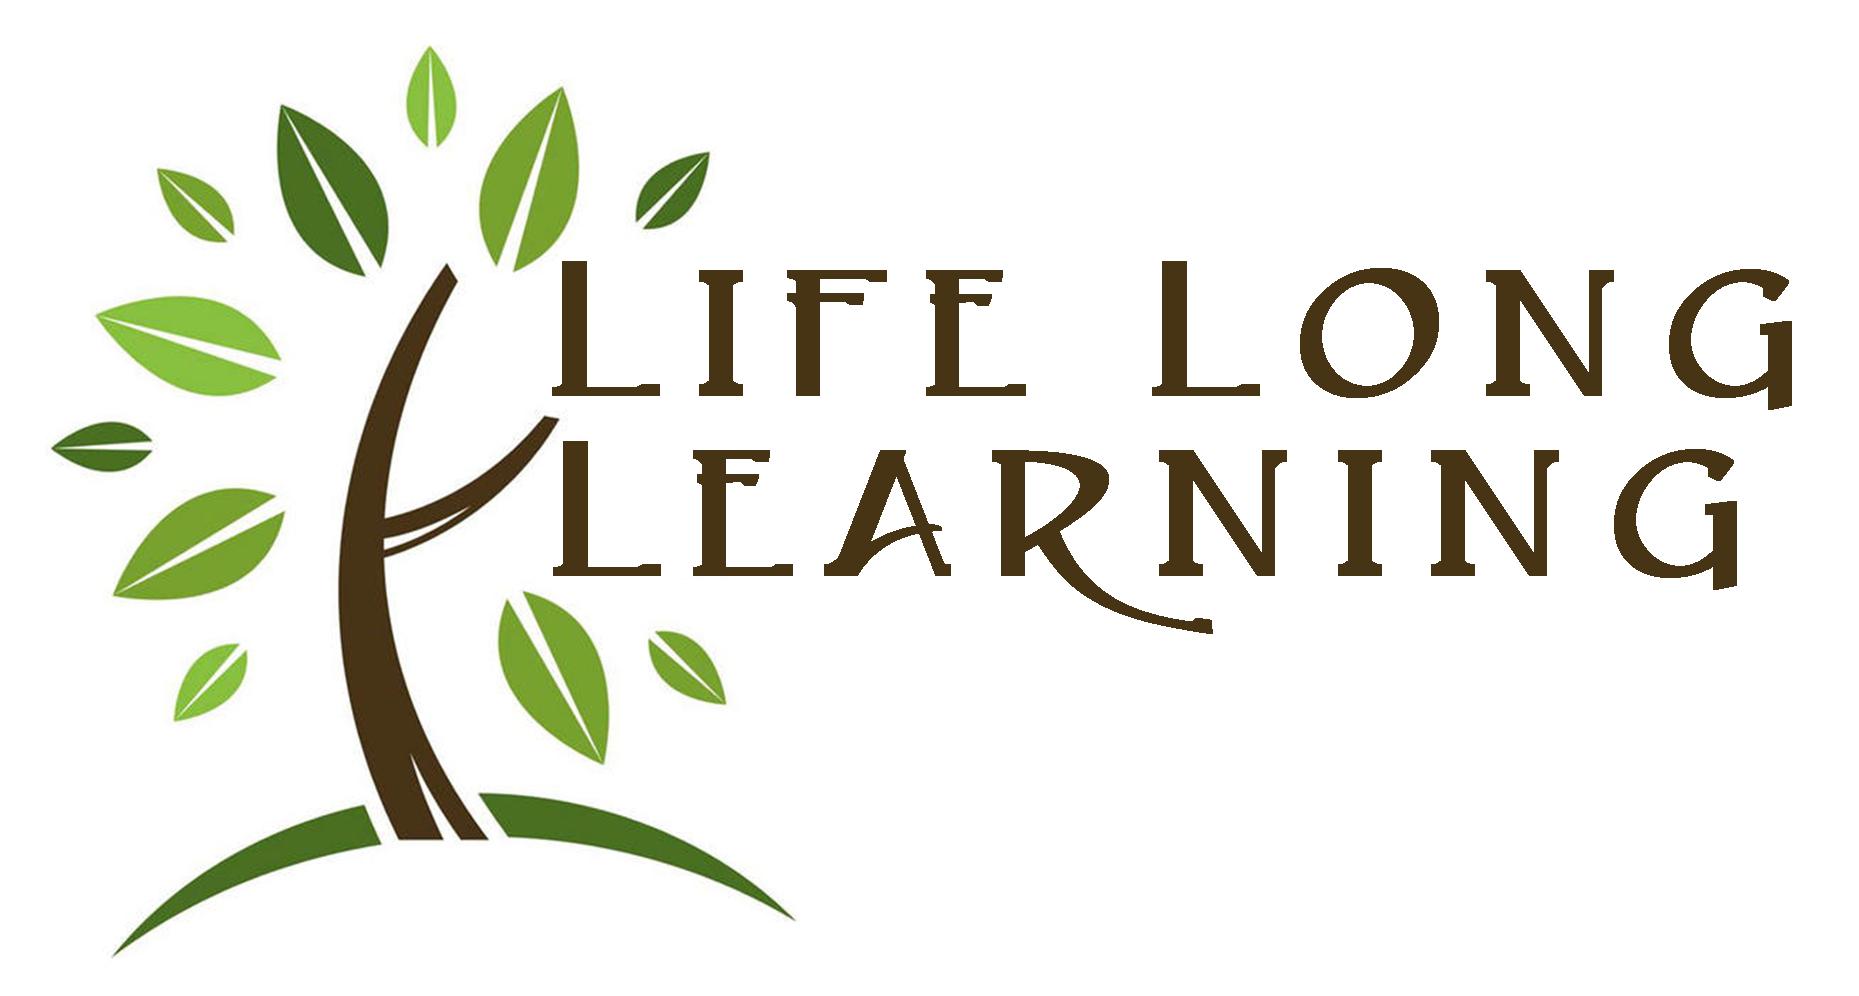 Long life work. Концепция lifelong Learning. Life Learning концепция. Концепция lifelong Learning. Непрерывное образование. Концепция lifelong Learning иконка.